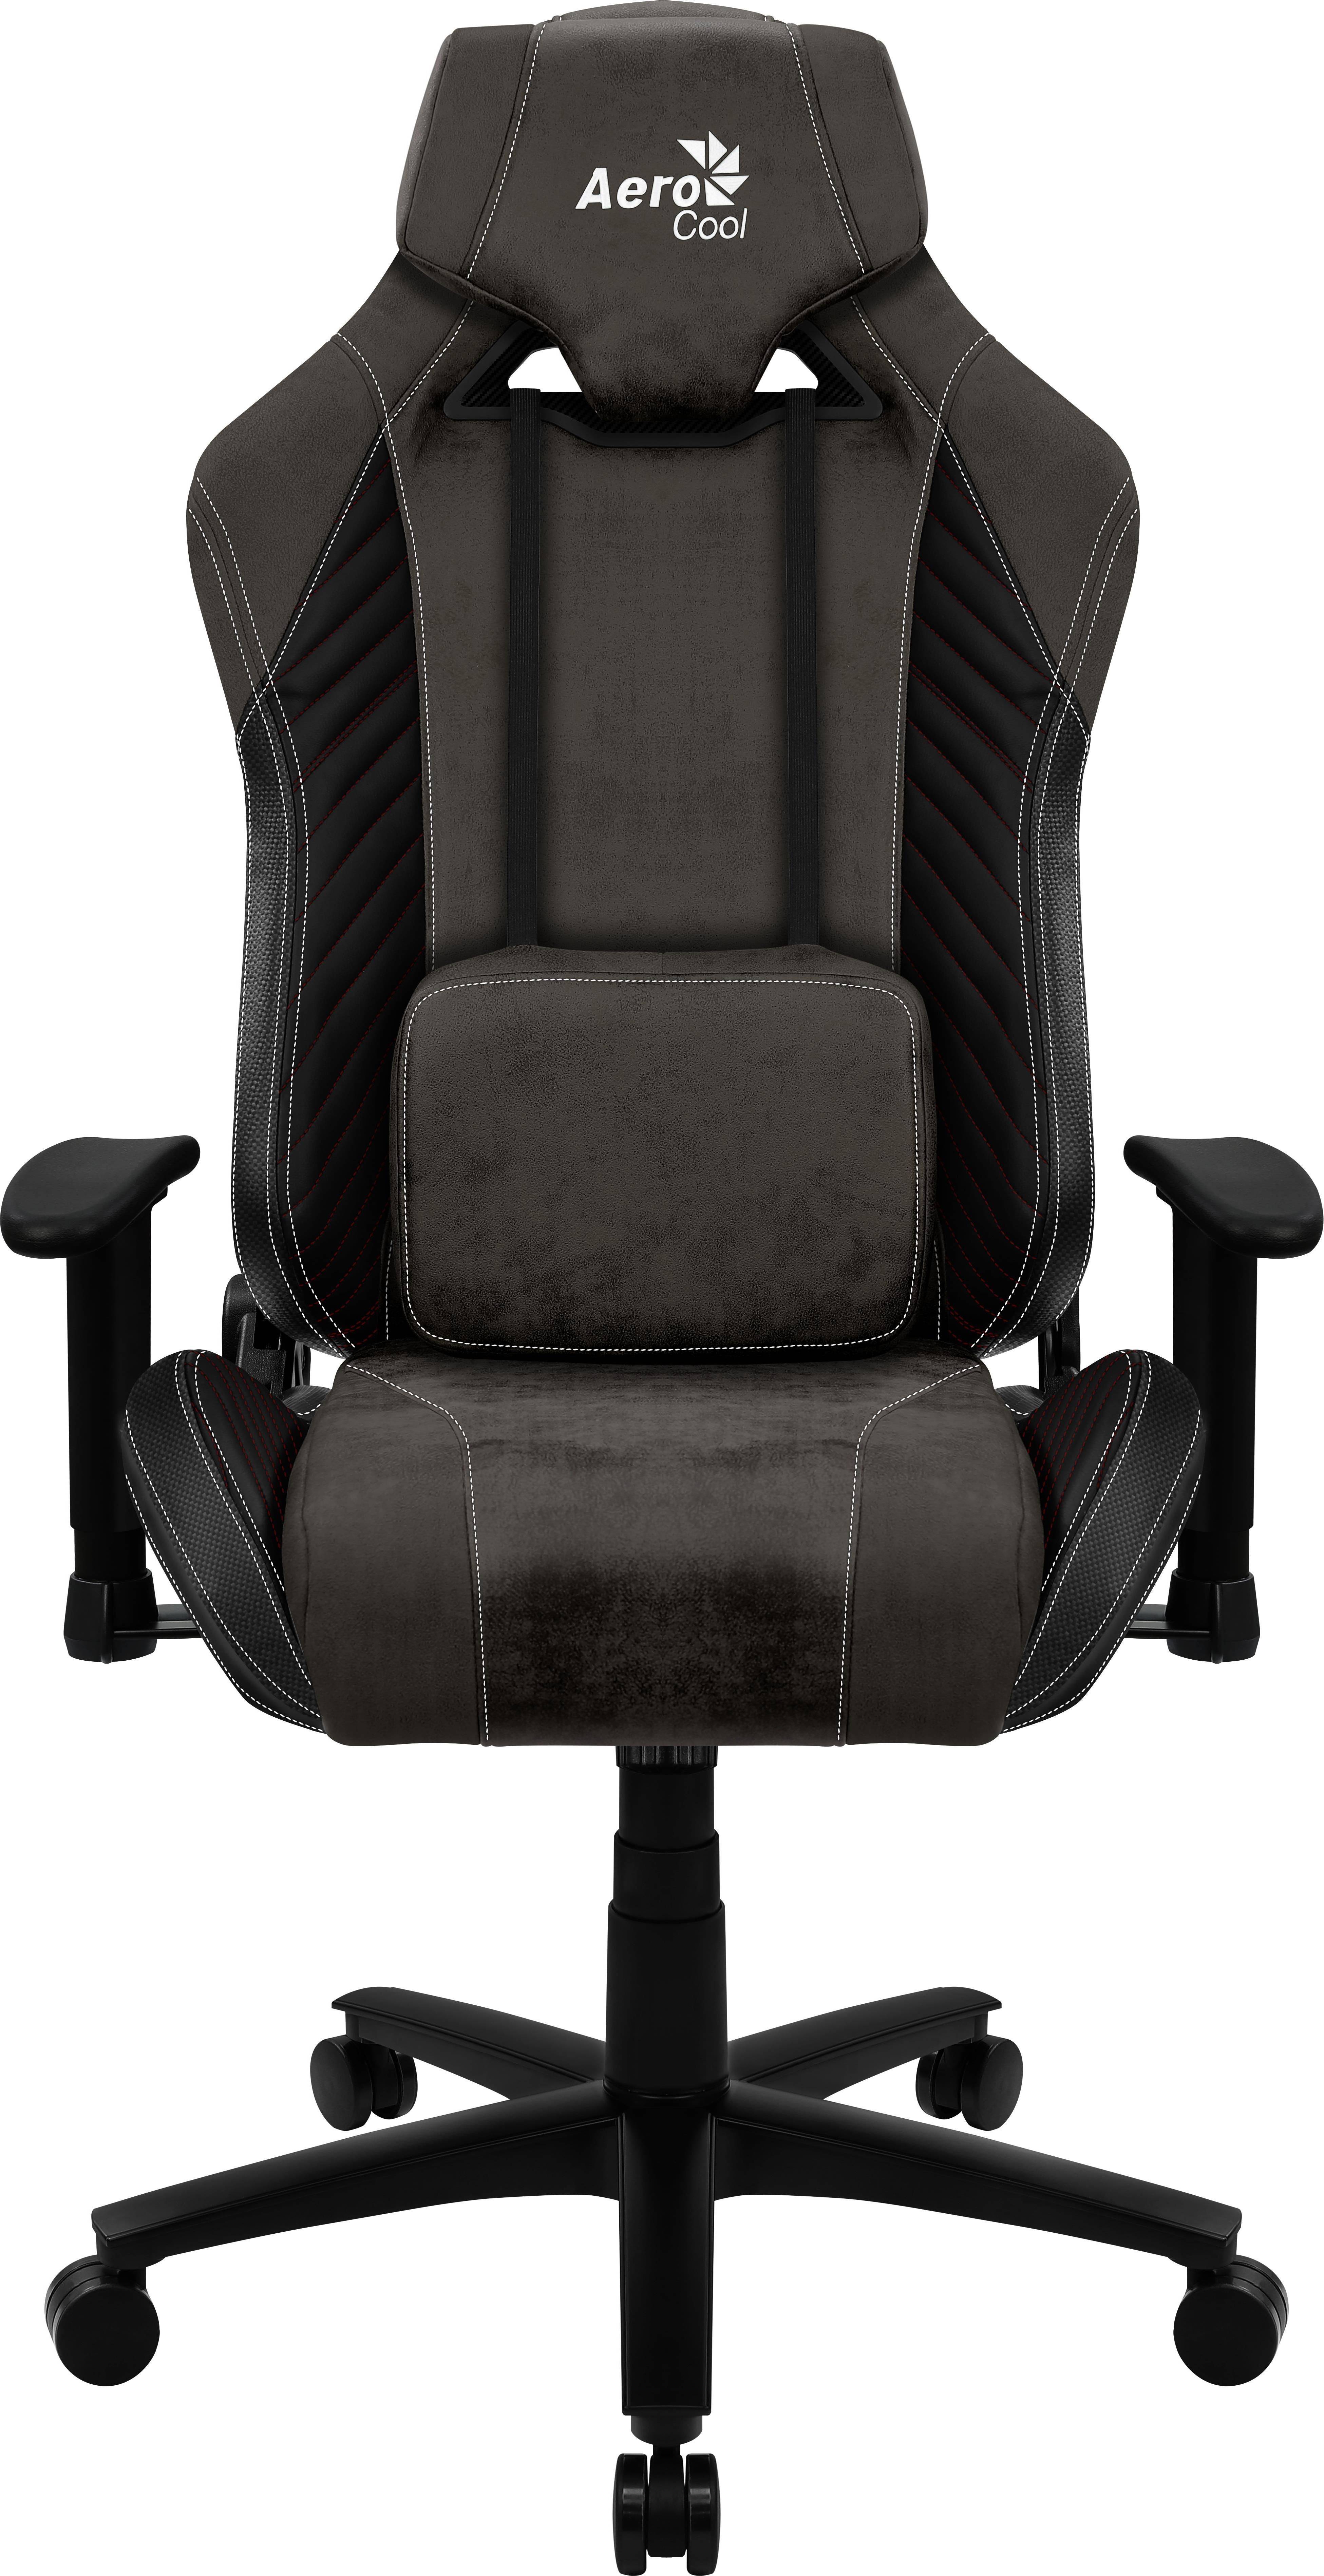  Bild på AeroCool Baron AeroSuede Universal Gaming Chair - Black gamingstol